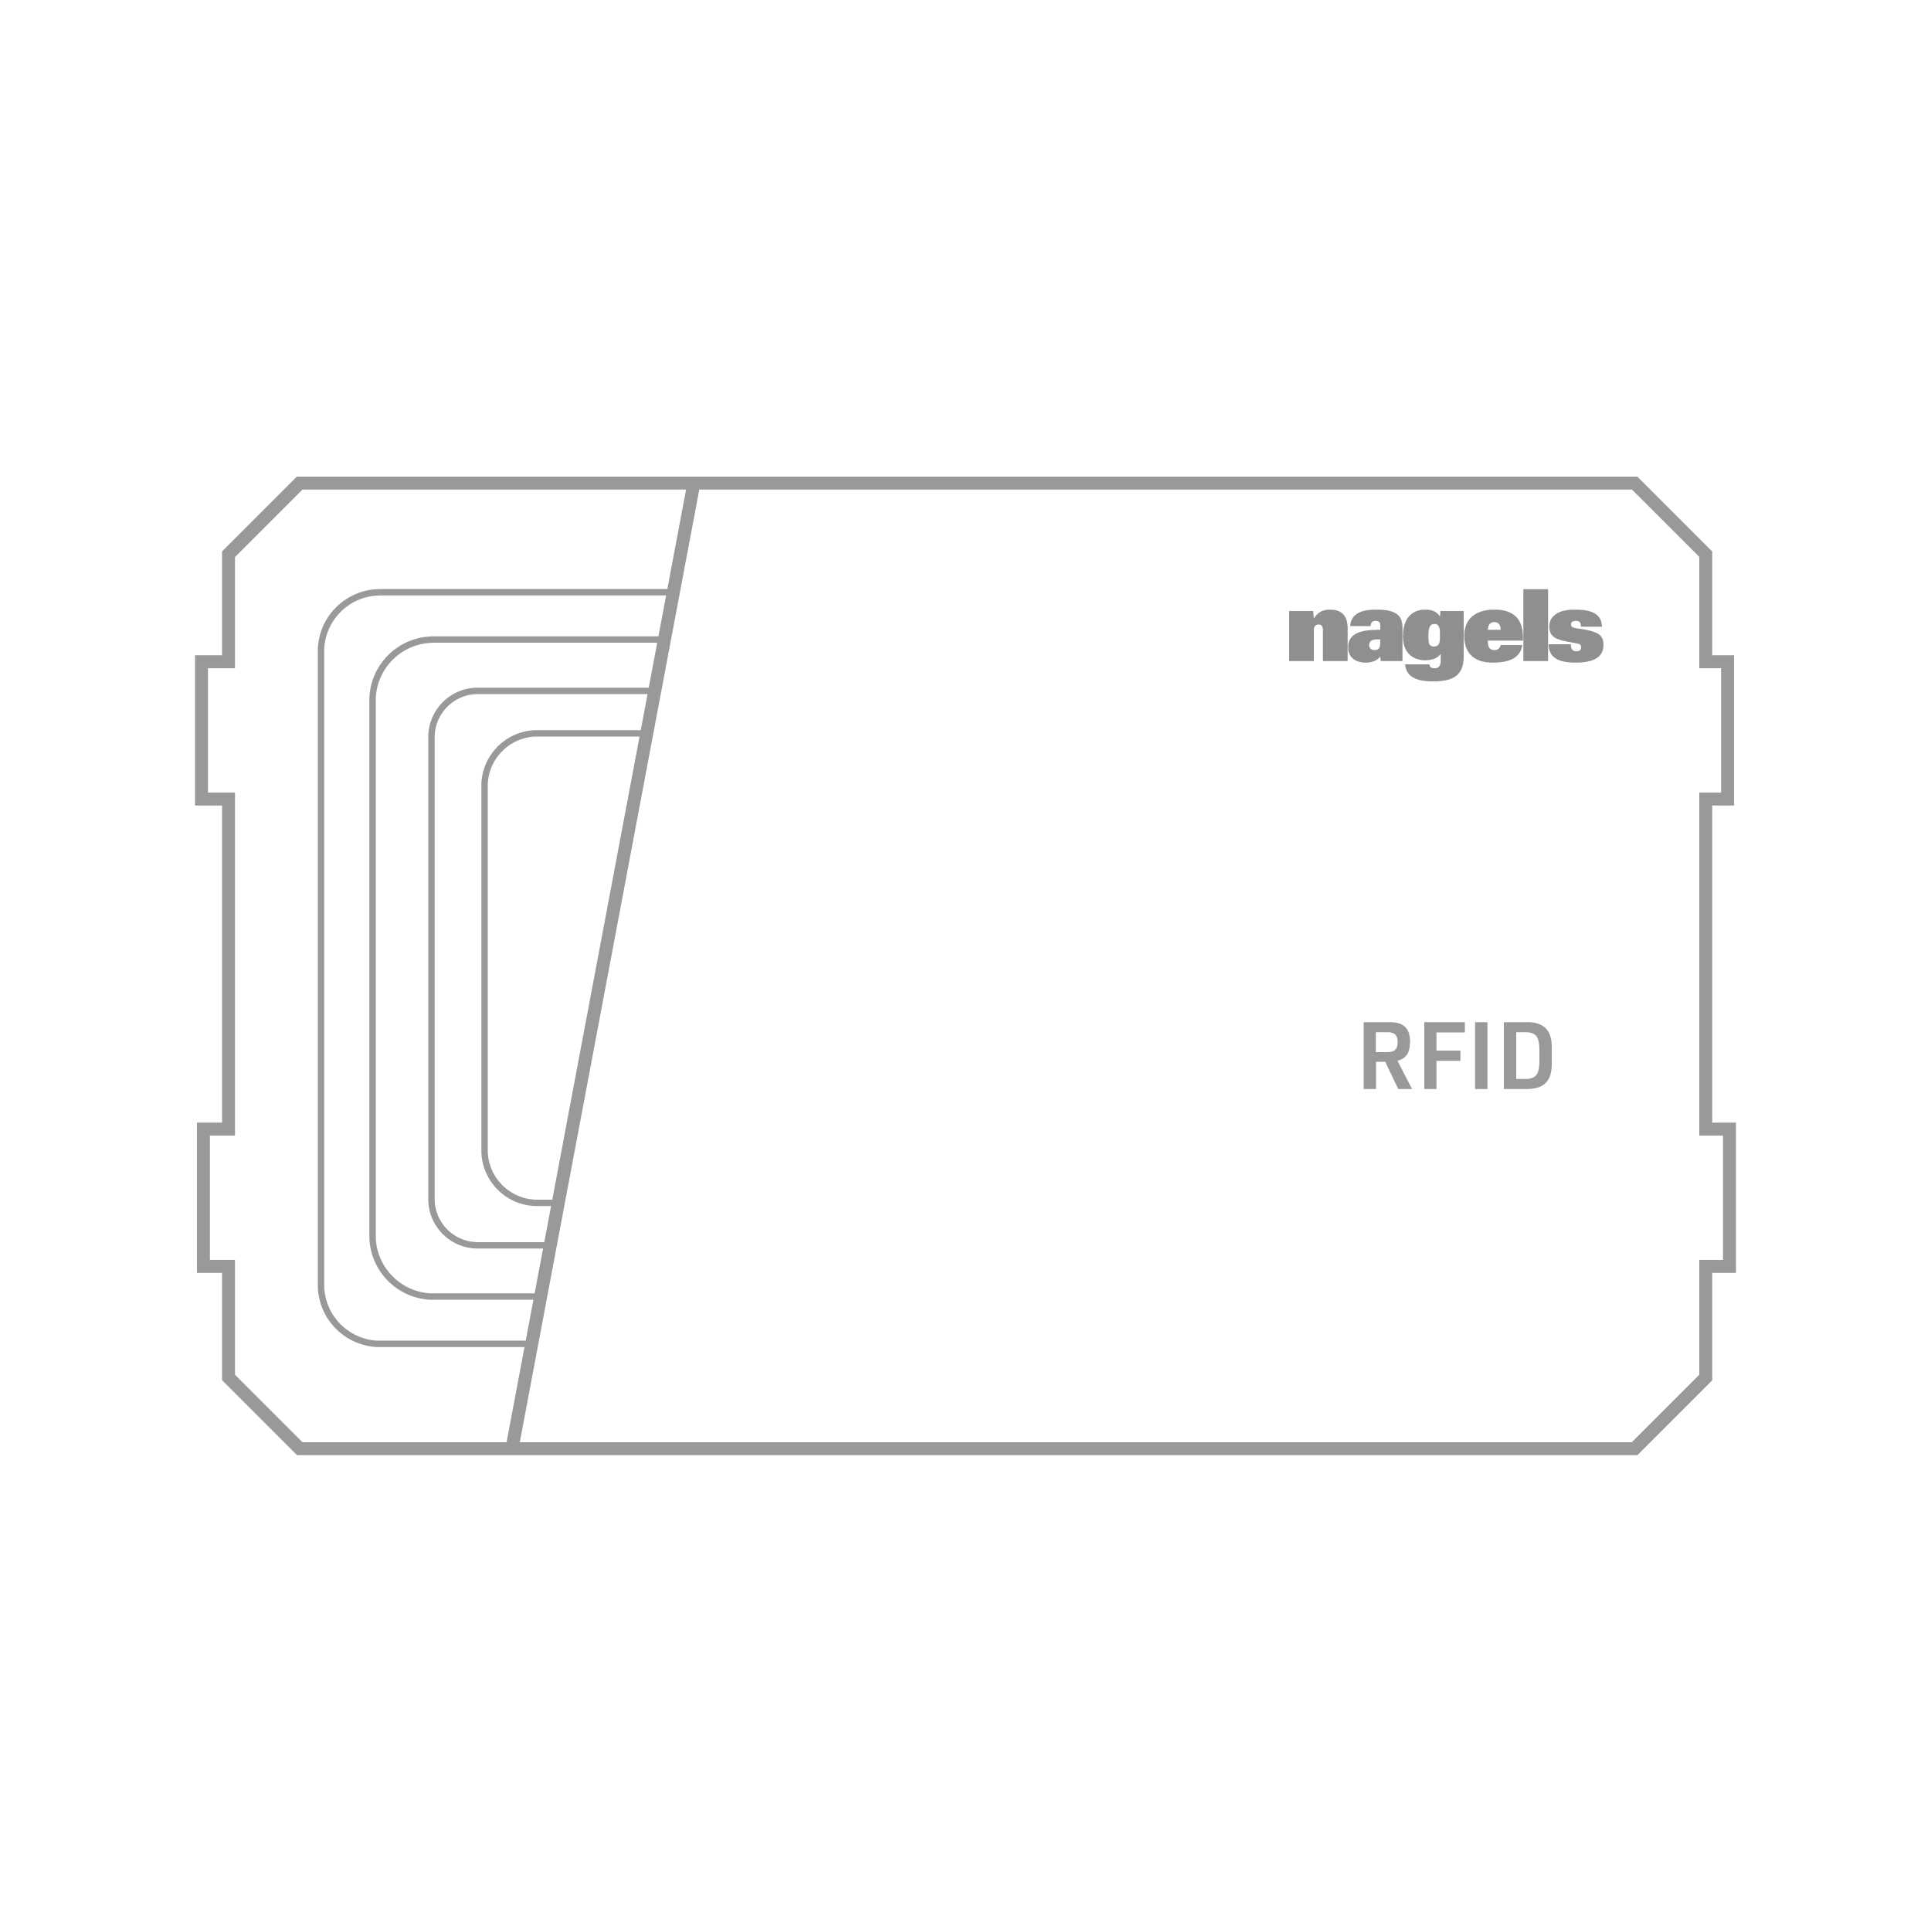 RFID-tickets